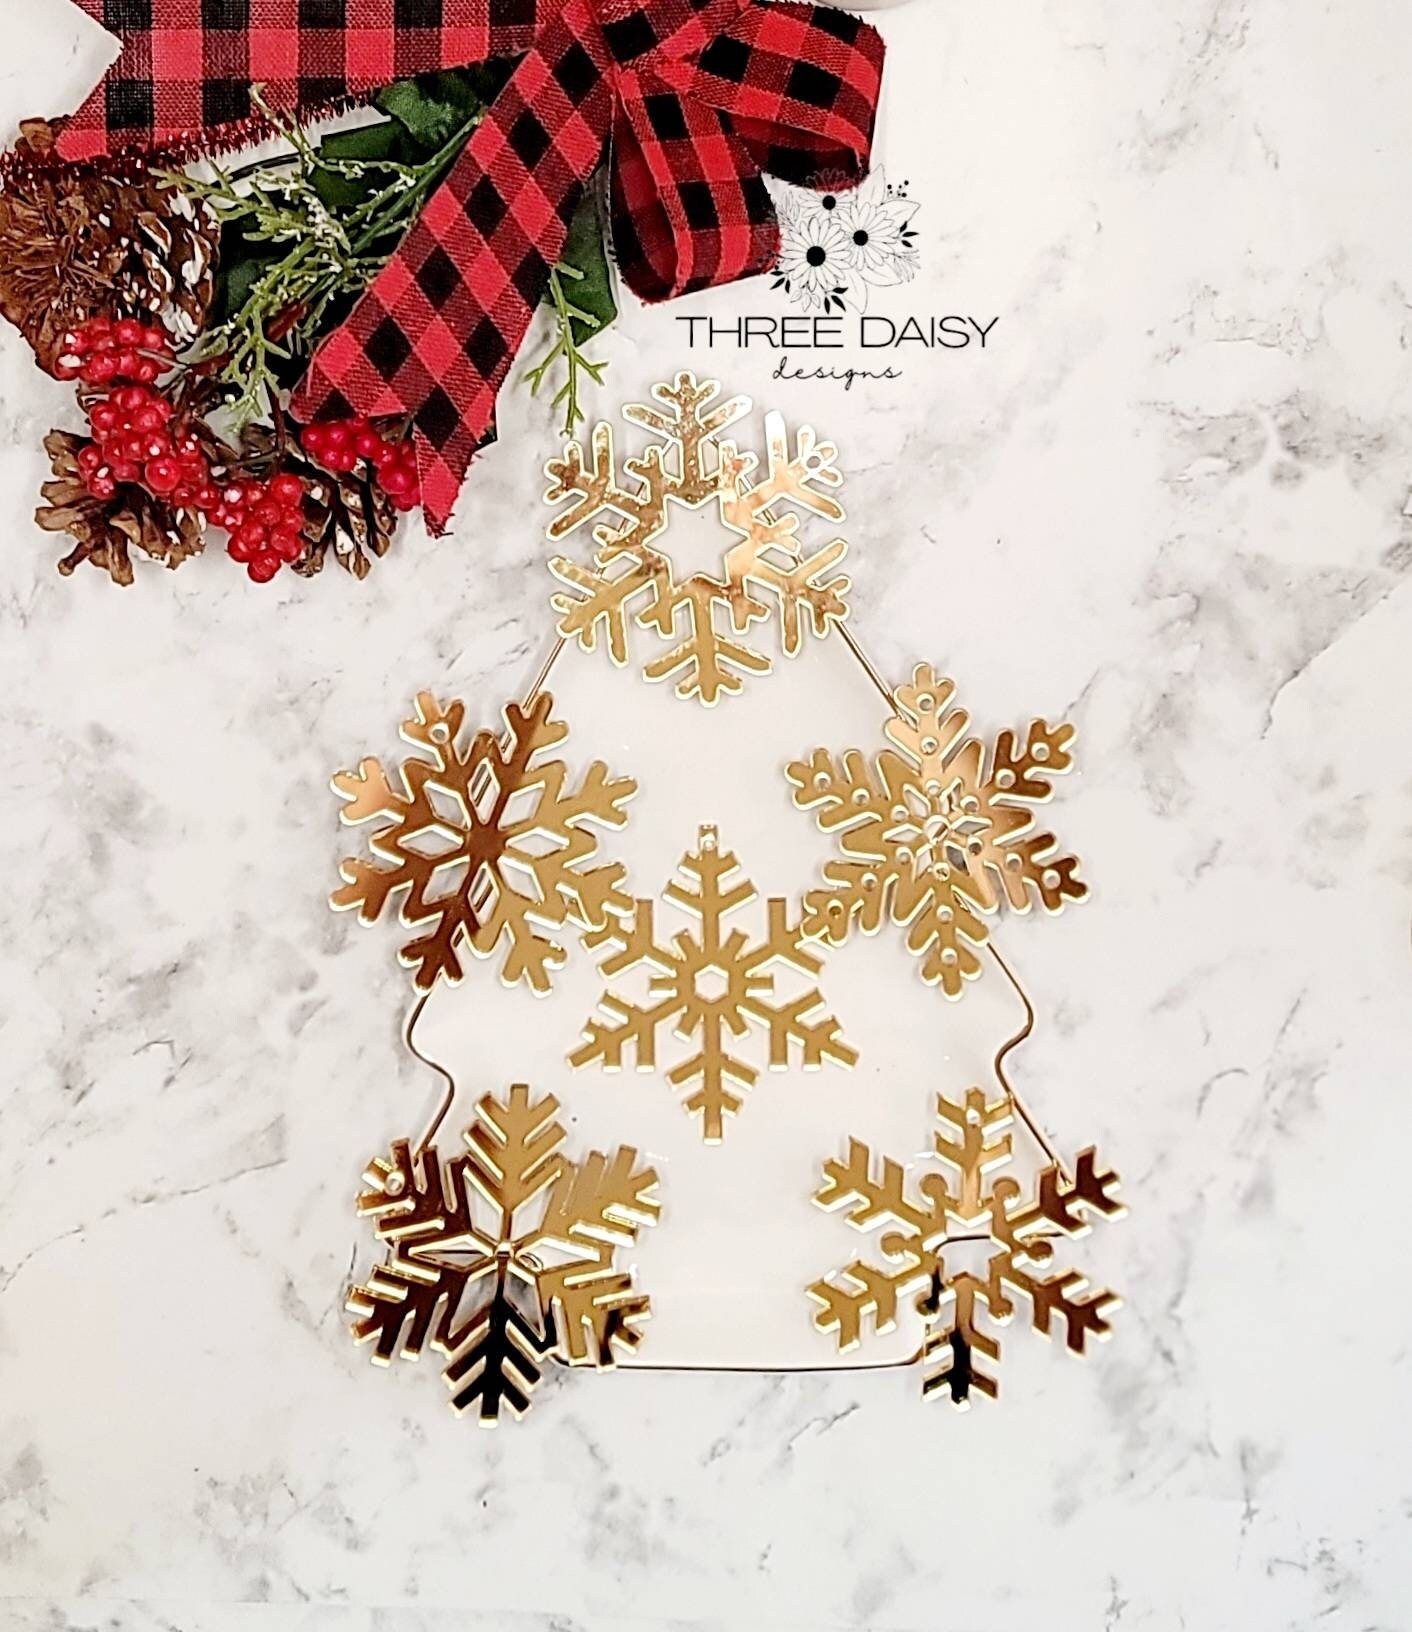 Set of 6 Acrylic Gold Mirror Snowflake Ornaments, Set Gold Acrylic  Snowflakes, Golden Christmas Ornaments, Tree Decor 